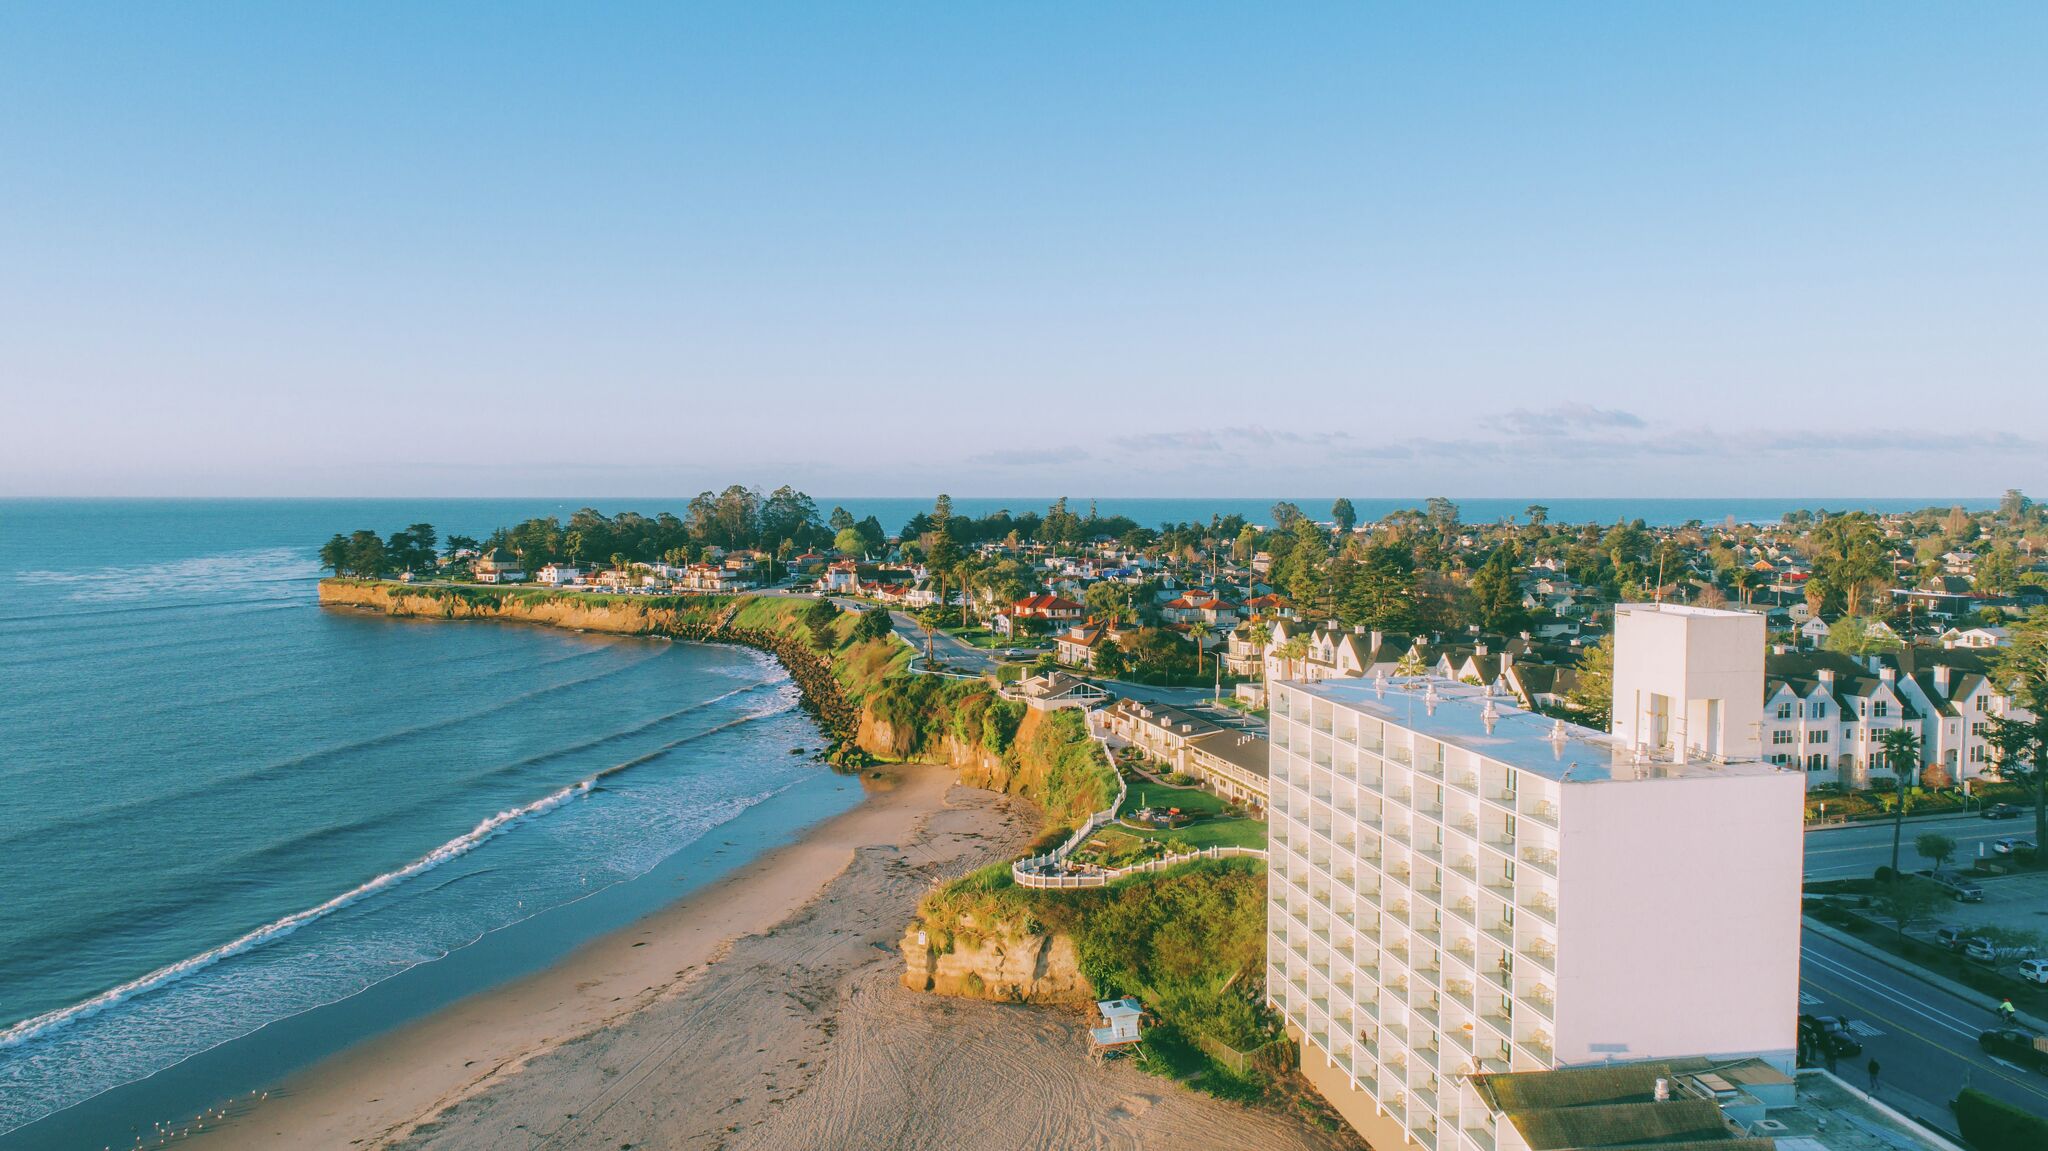 Best Santa Cruz hotels depending on your budget